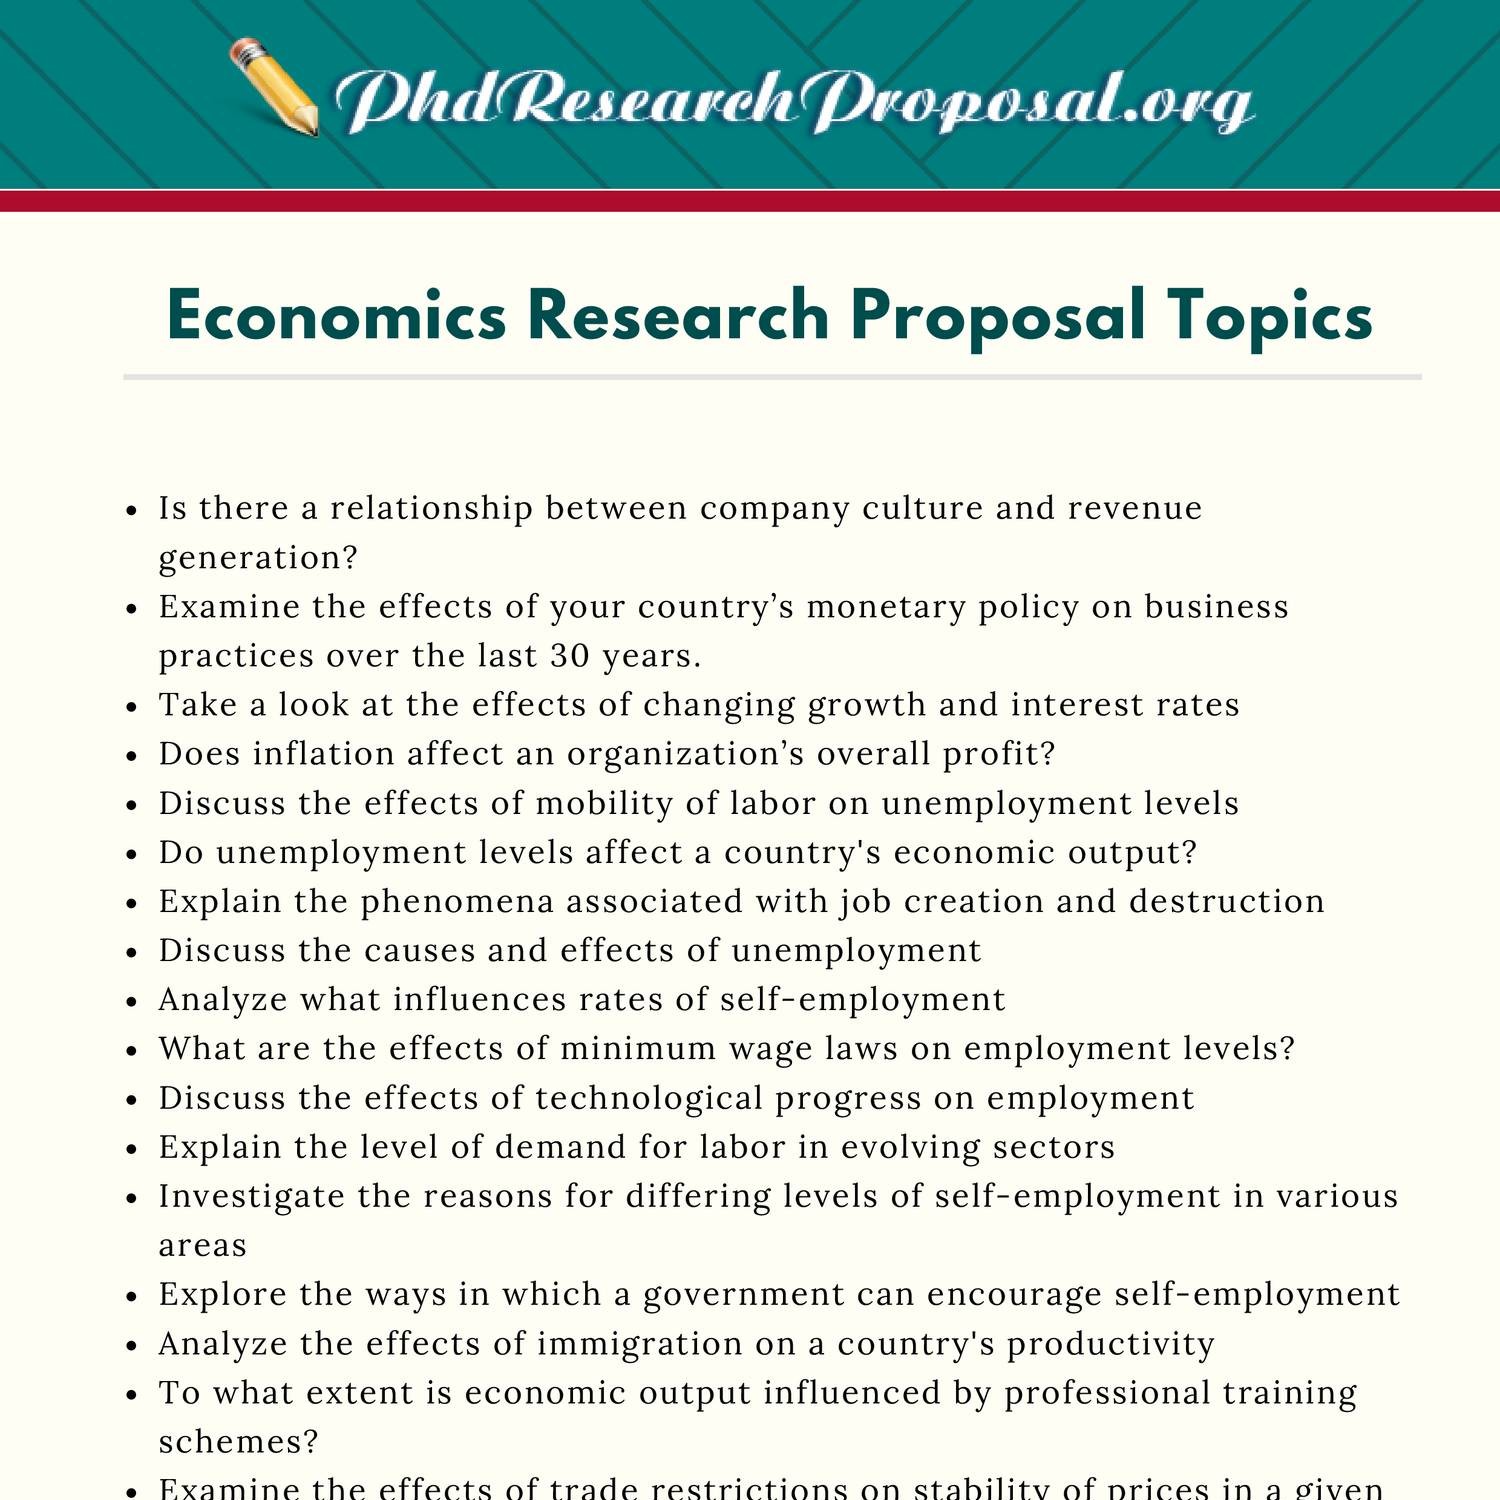 research proposal economic growth